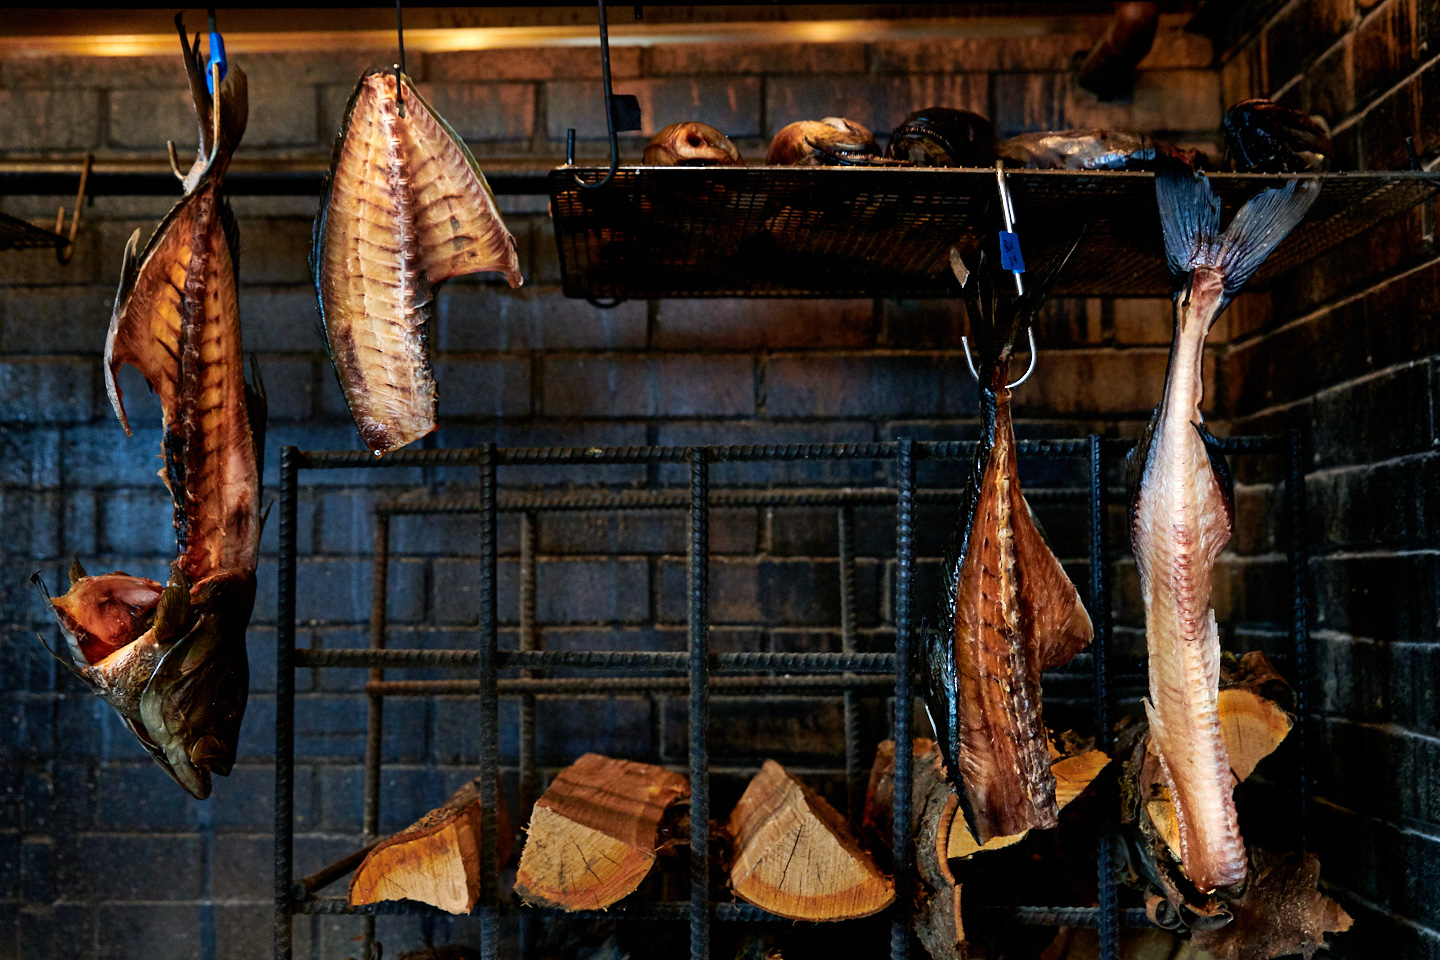 editorial-food-photographer-dried-fish-portland-oregon